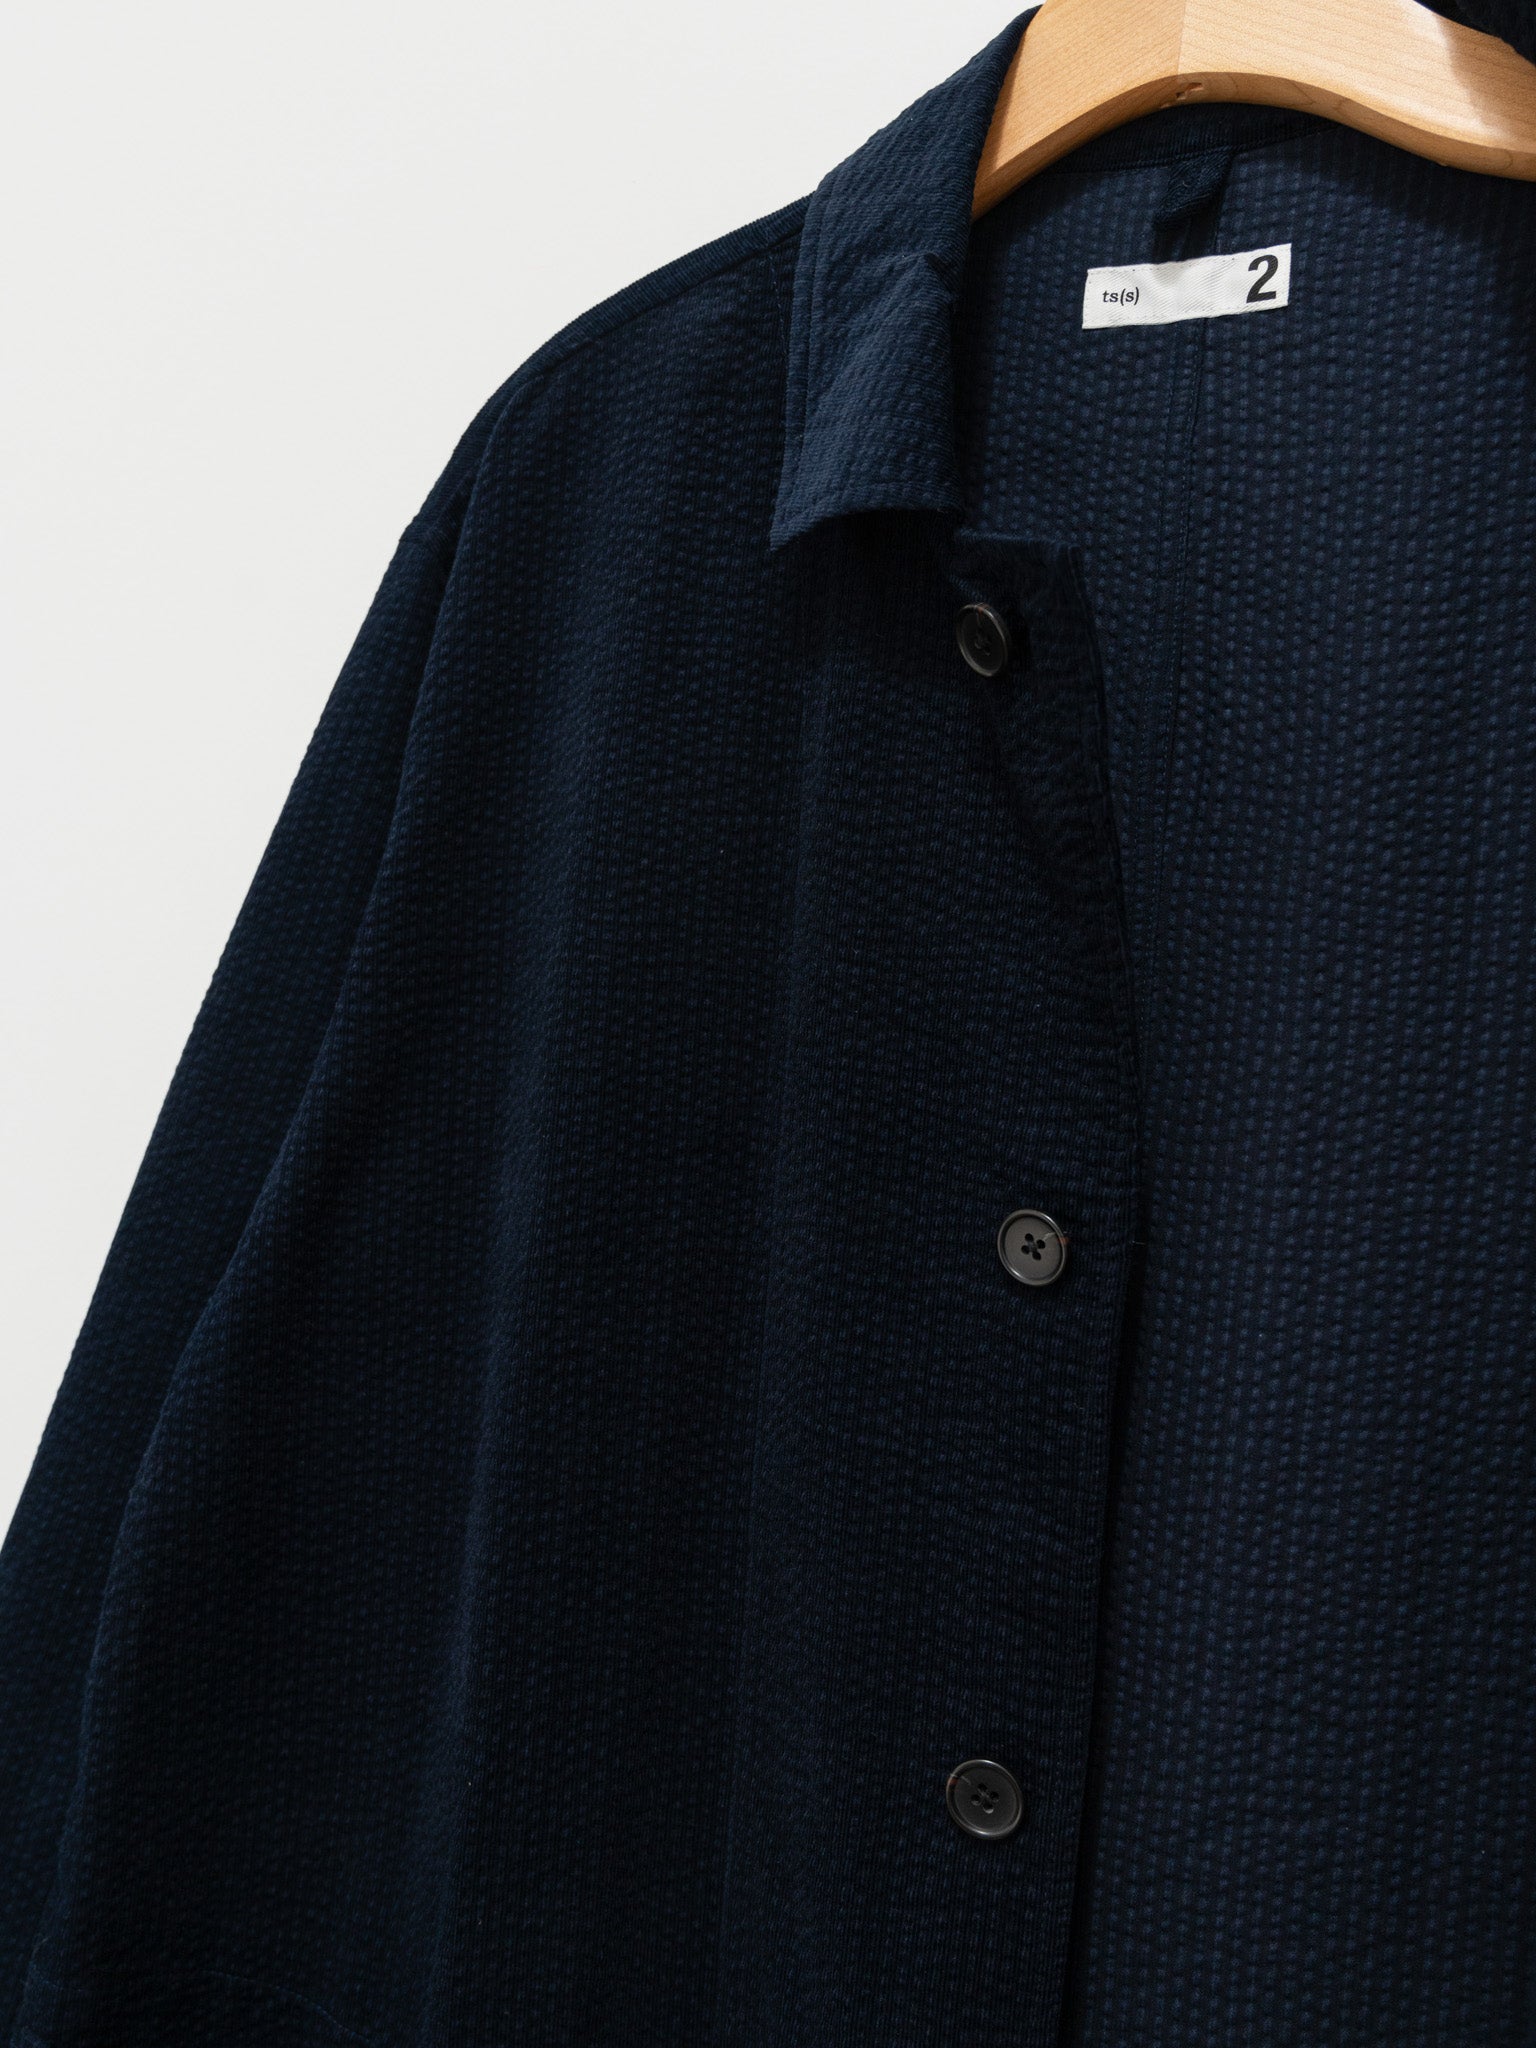 Namu Shop - ts(s) Cotton Ripple Corduroy Shirt Coat - Navy